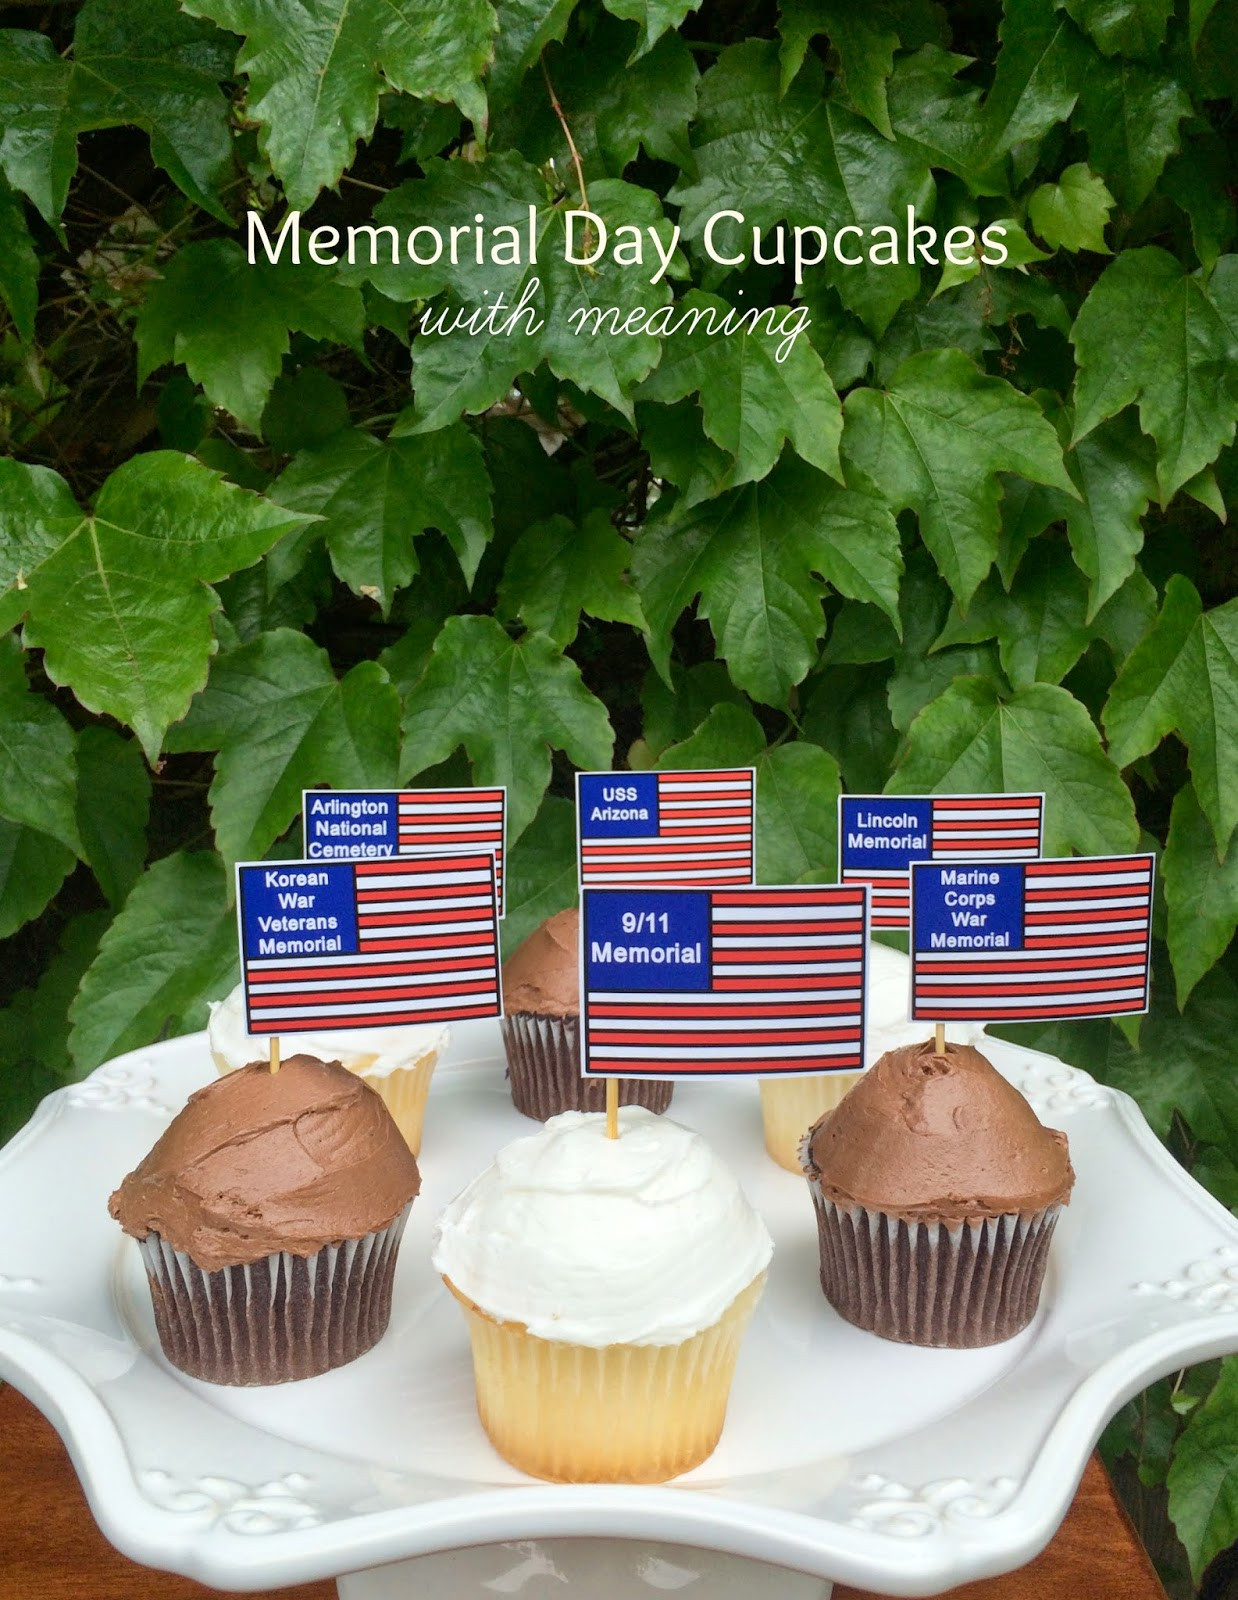 Memorial Day Cupcakes Ideas
 Jac o lyn Murphy Memorial Day Cupcakes with meaning